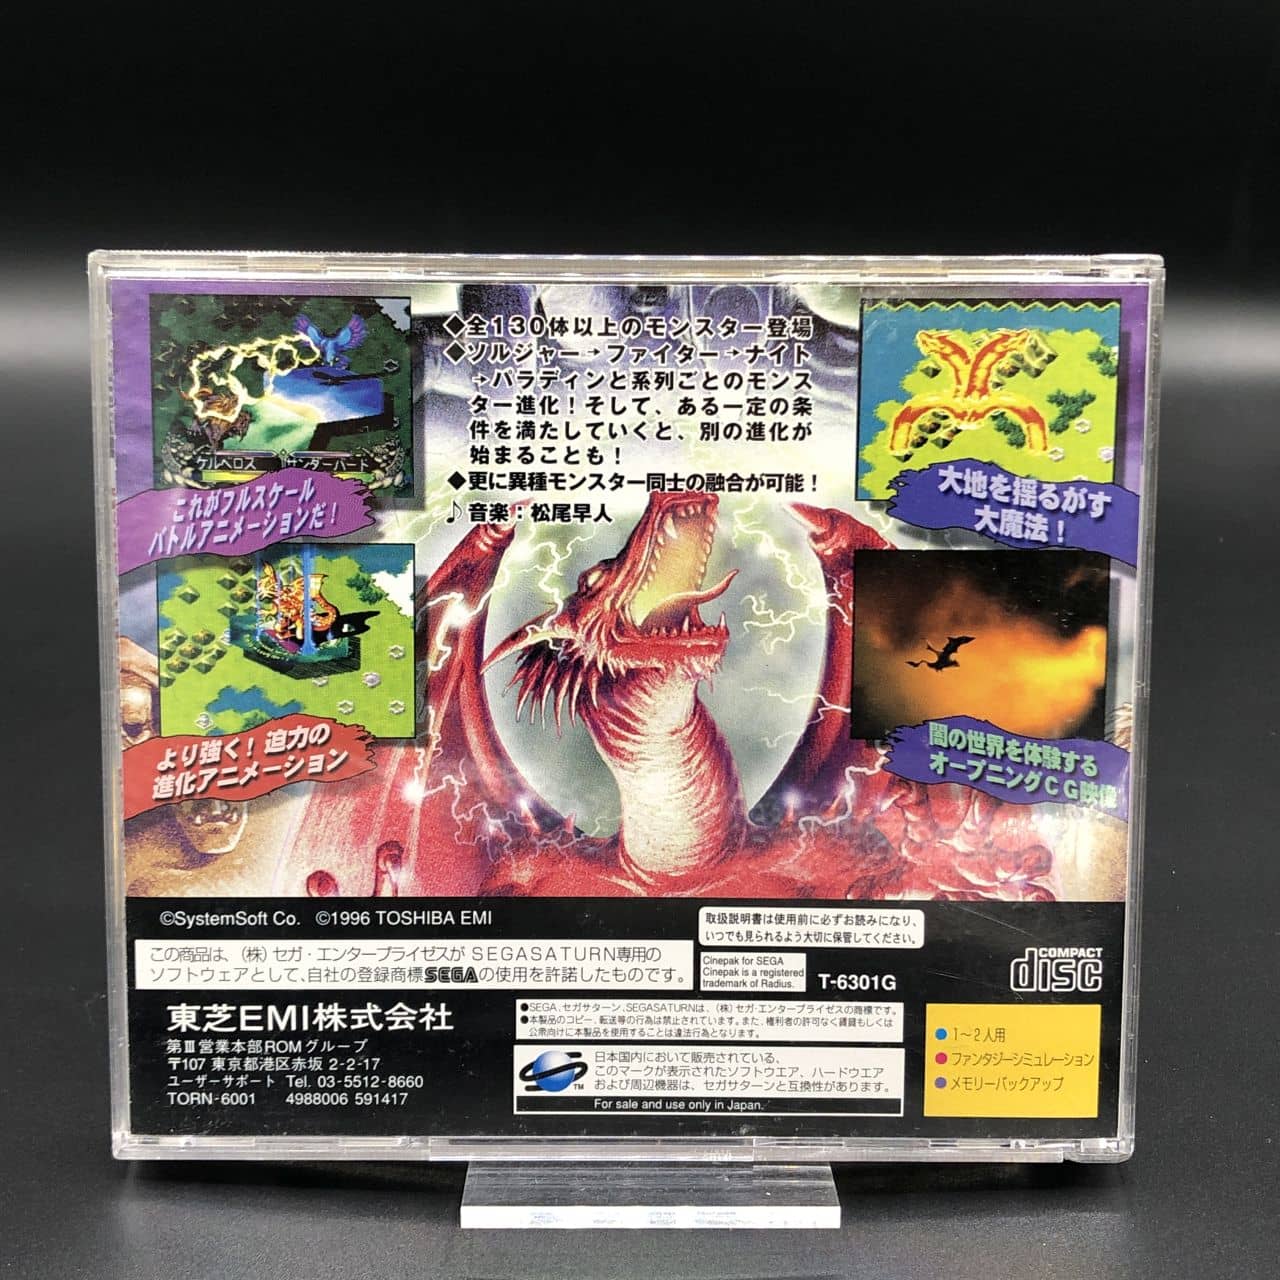 Master of Monsters (Import Japan) (Komplett) (Sehr gut) Sega Saturn